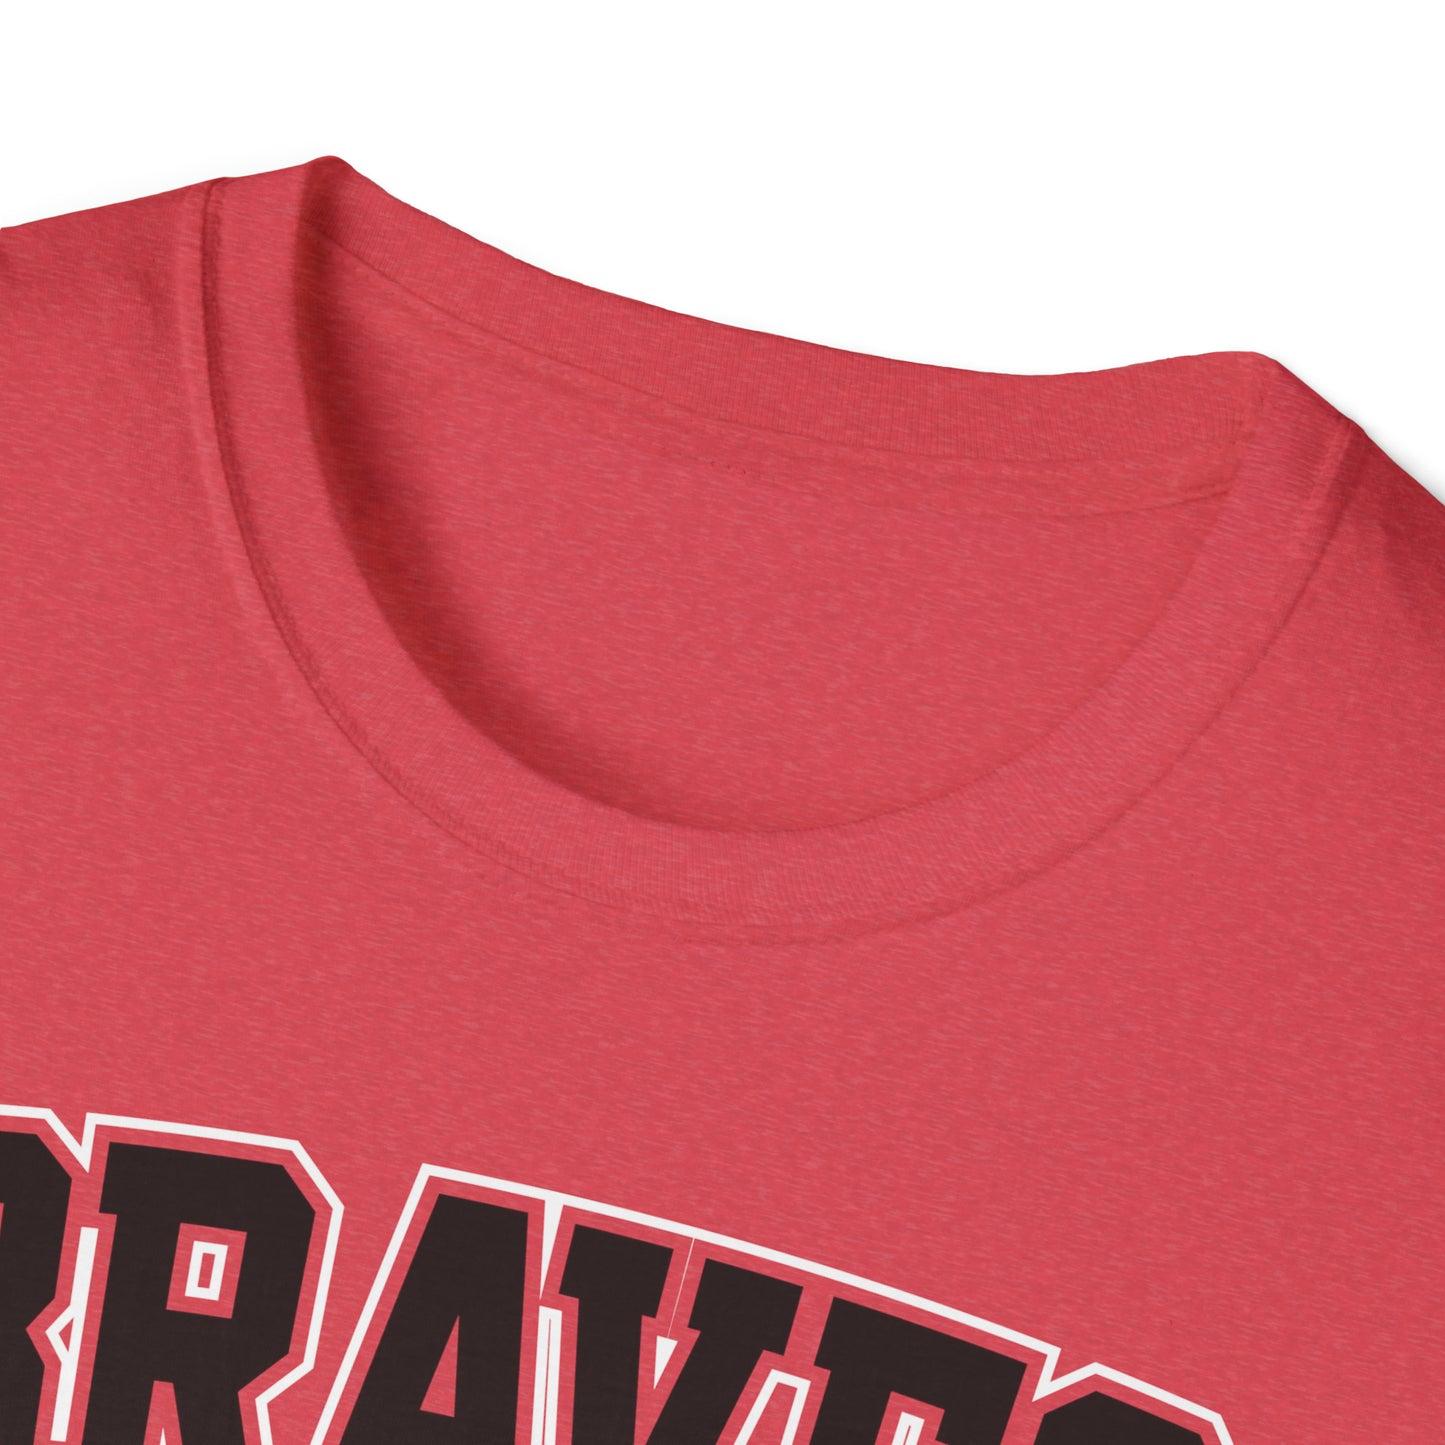 Braves Basketball Unisex Softstyle T-Shirt